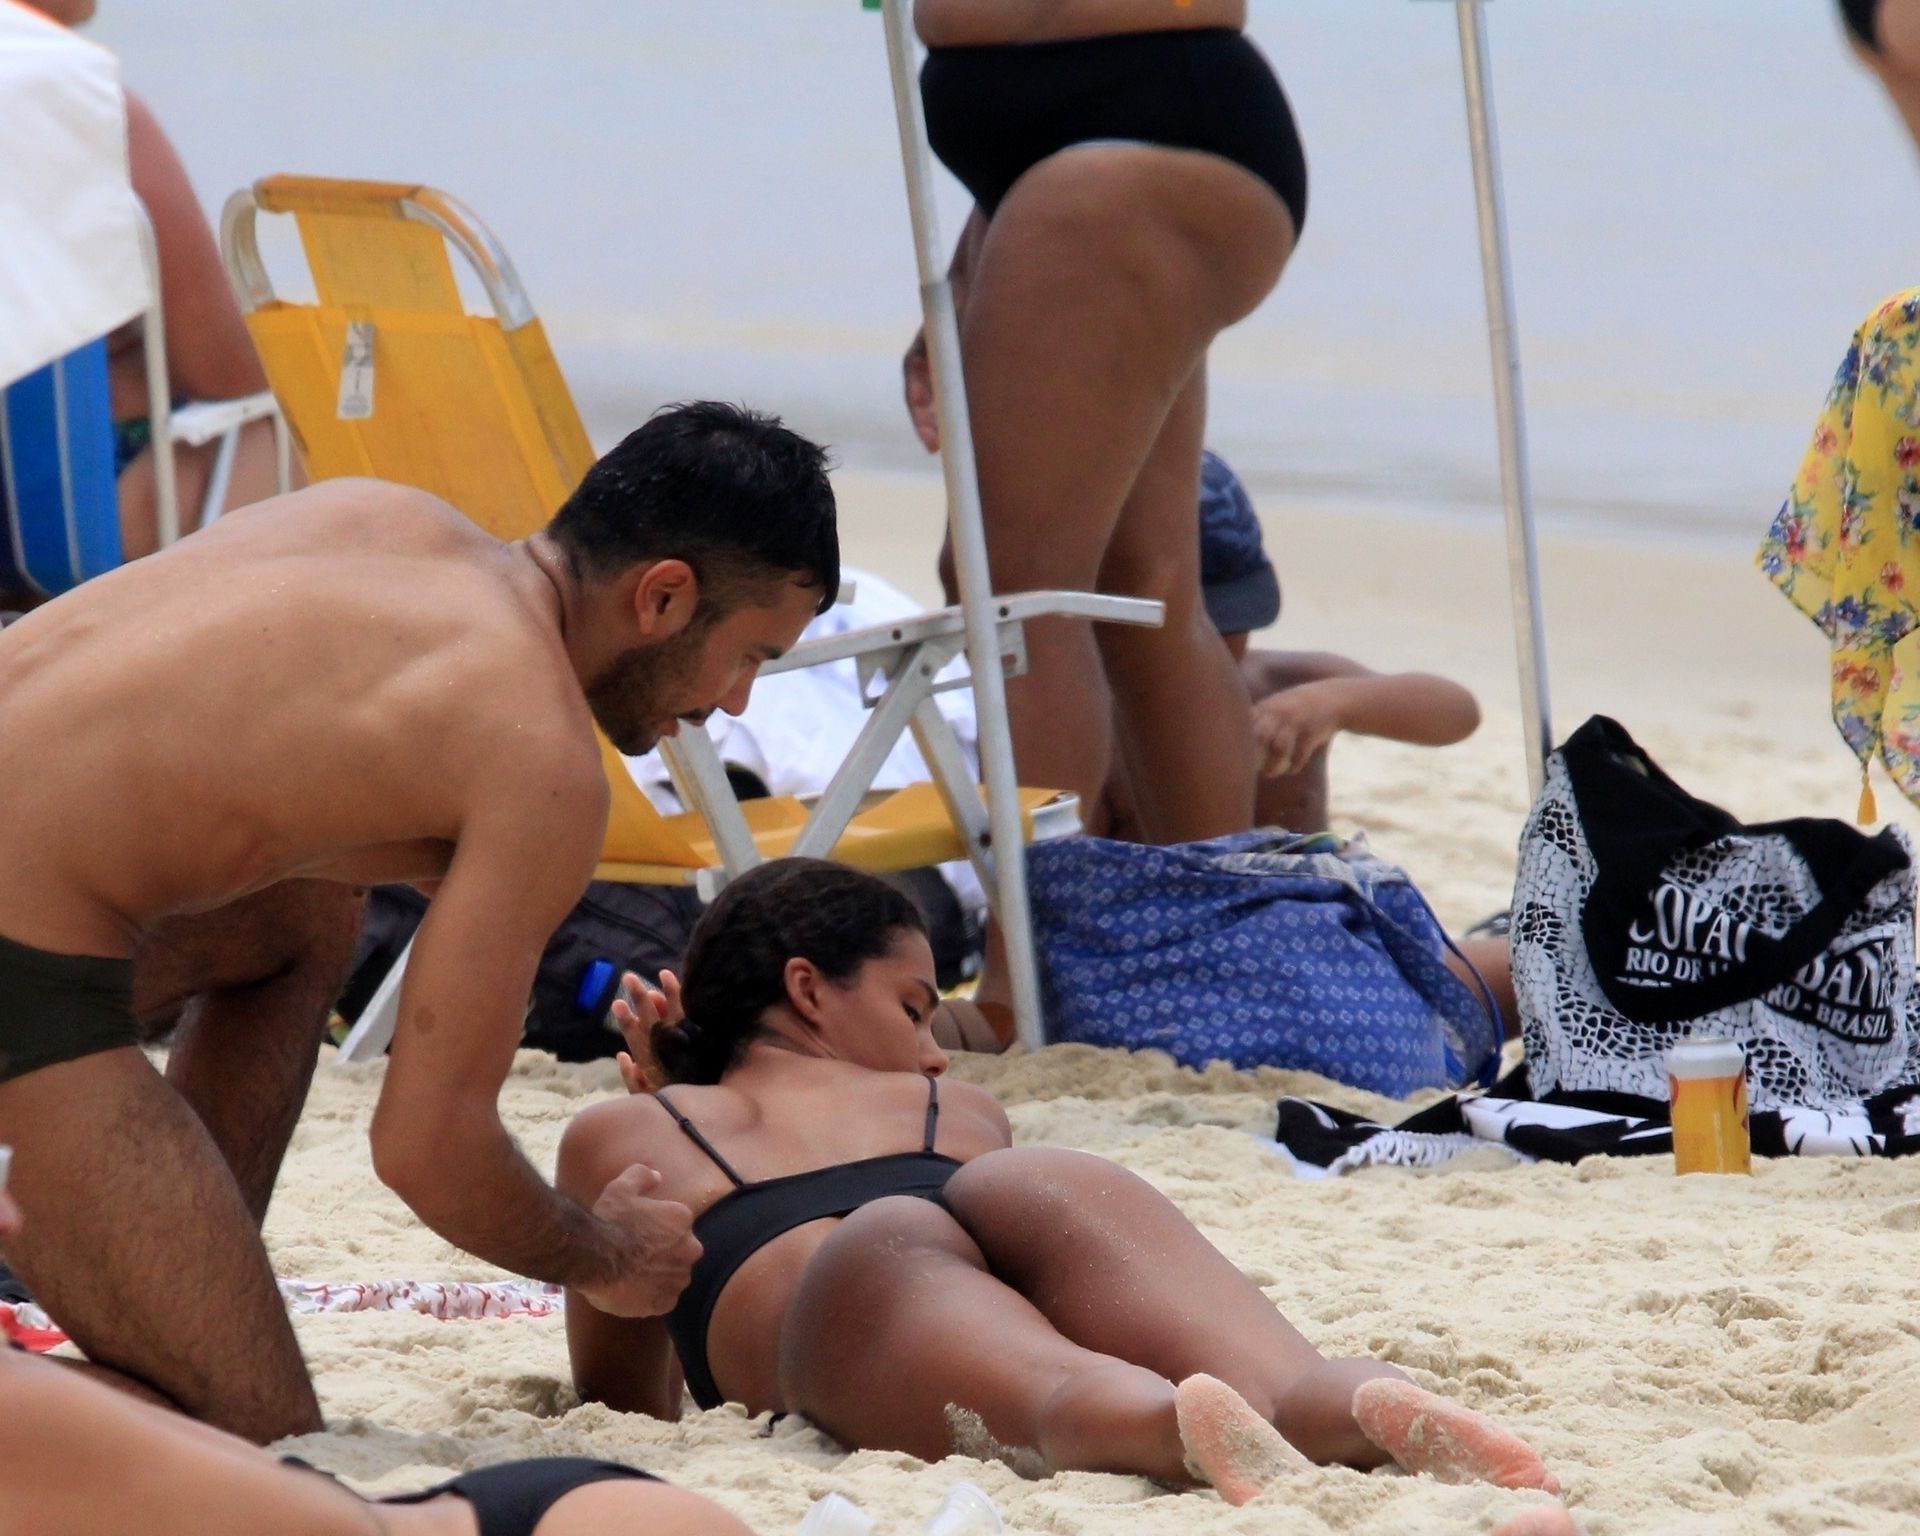 Sexy Tina Kunakey Enjoys Her Vacation In Rio De Janeiro 0079